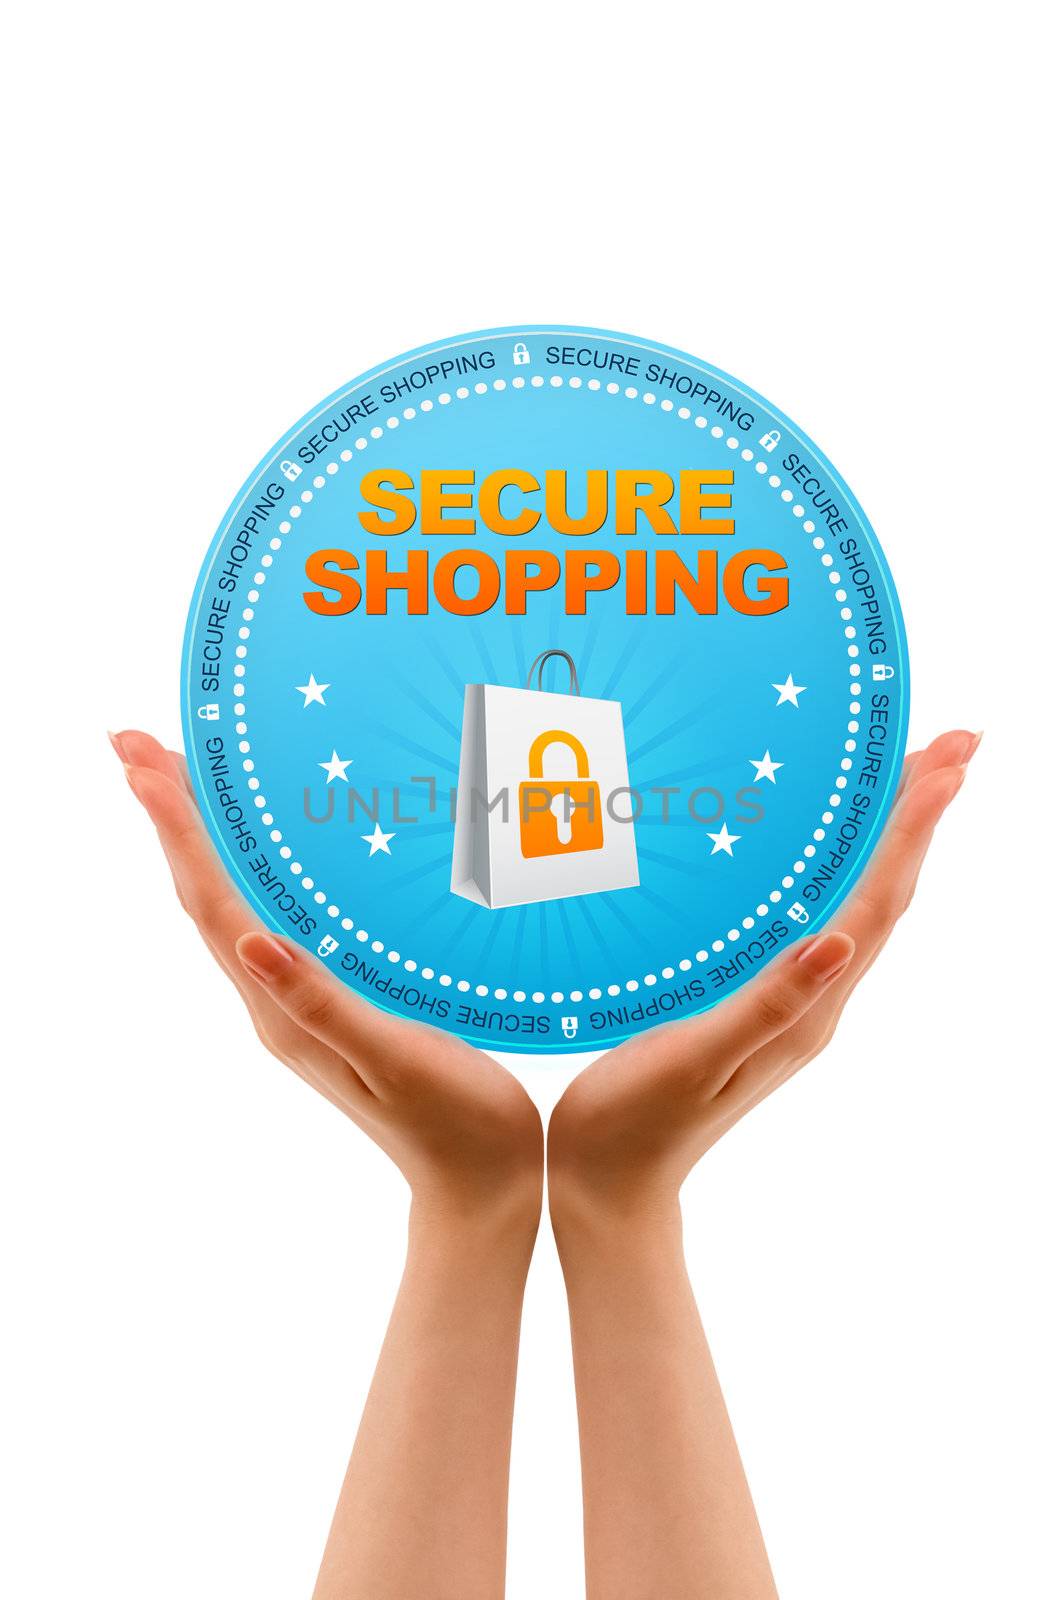 Secure Shopping by kbuntu